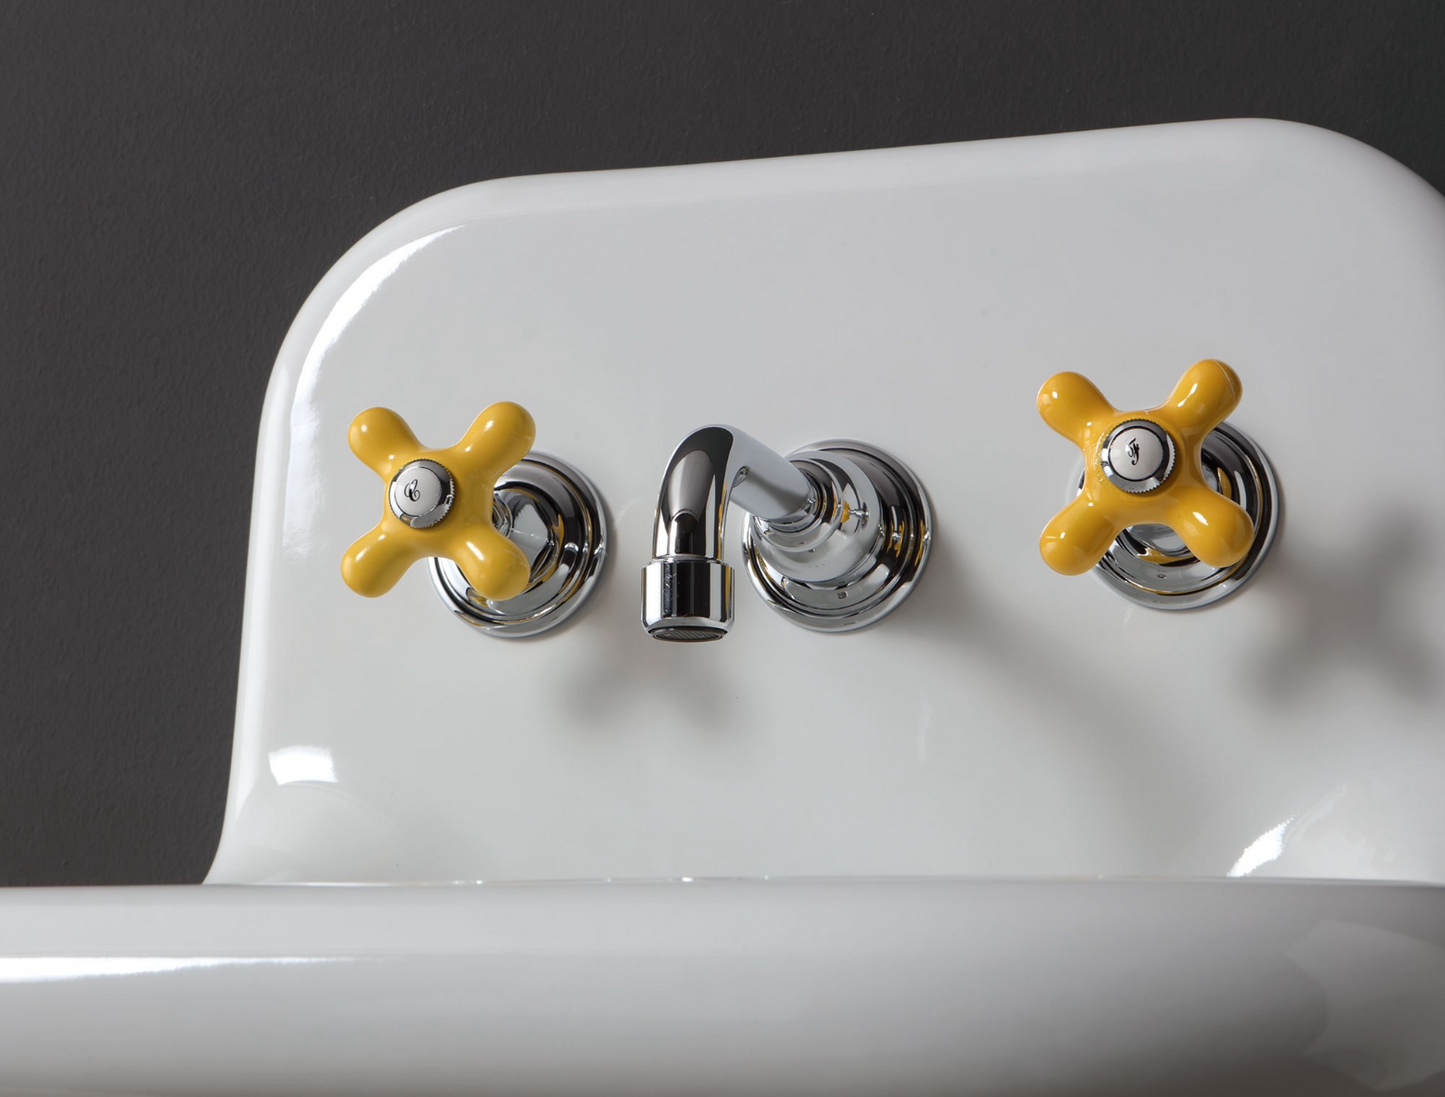 Built-in basin faucet for True Colors Vintage style basins